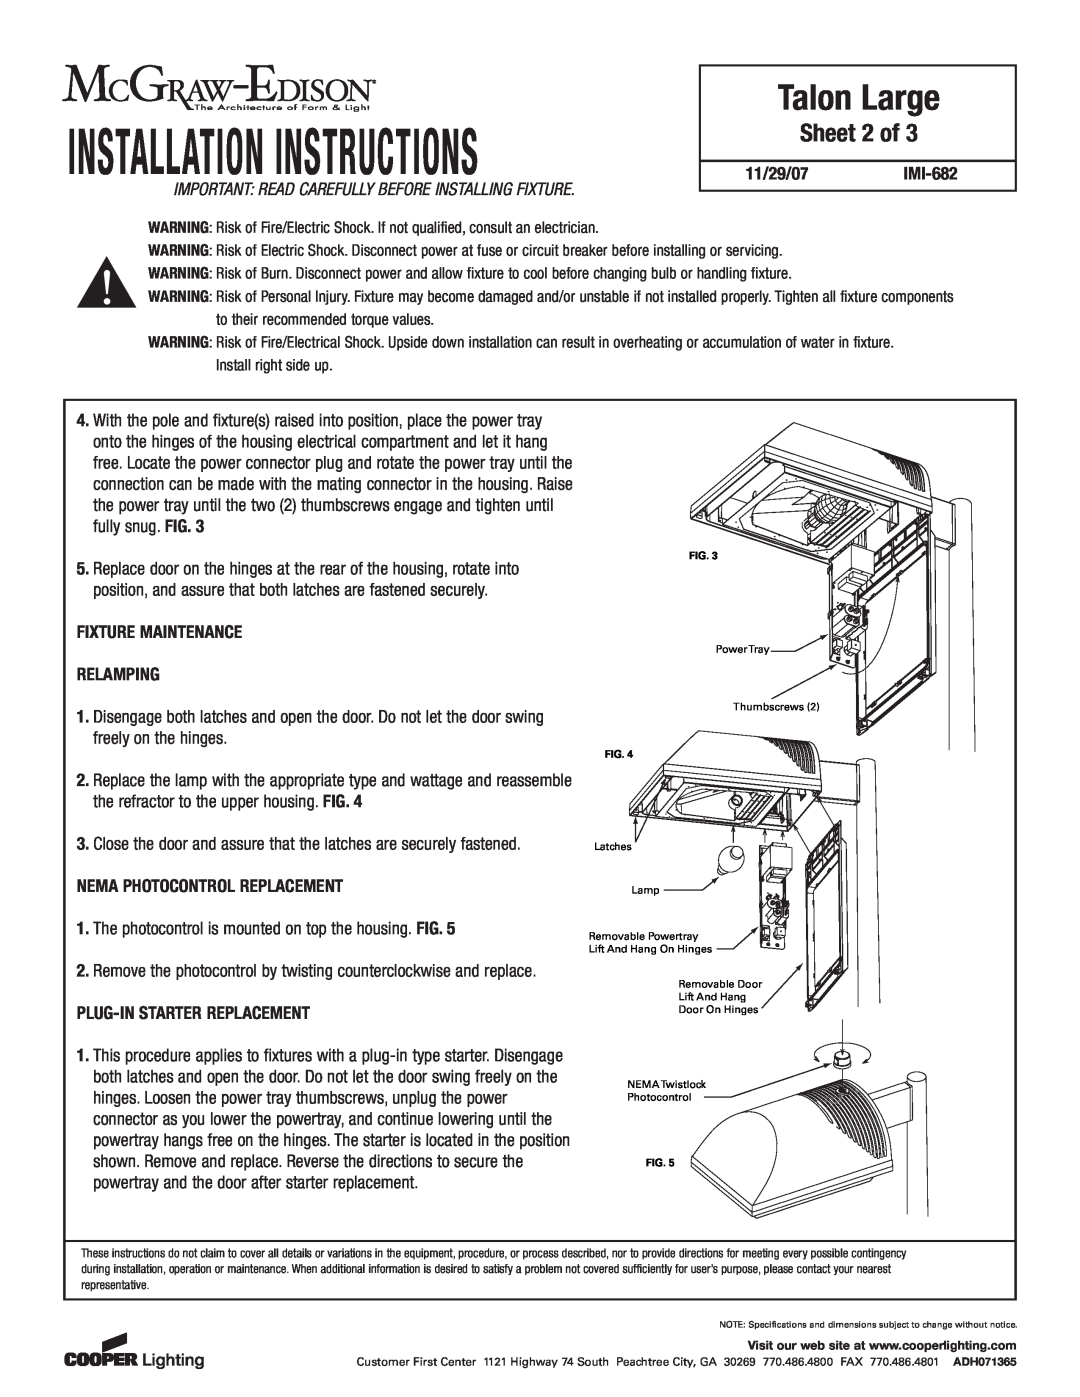 Cooper Lighting IMI-682 installation instructions Sheet 2 of, Installation Instructions, Talon Large 